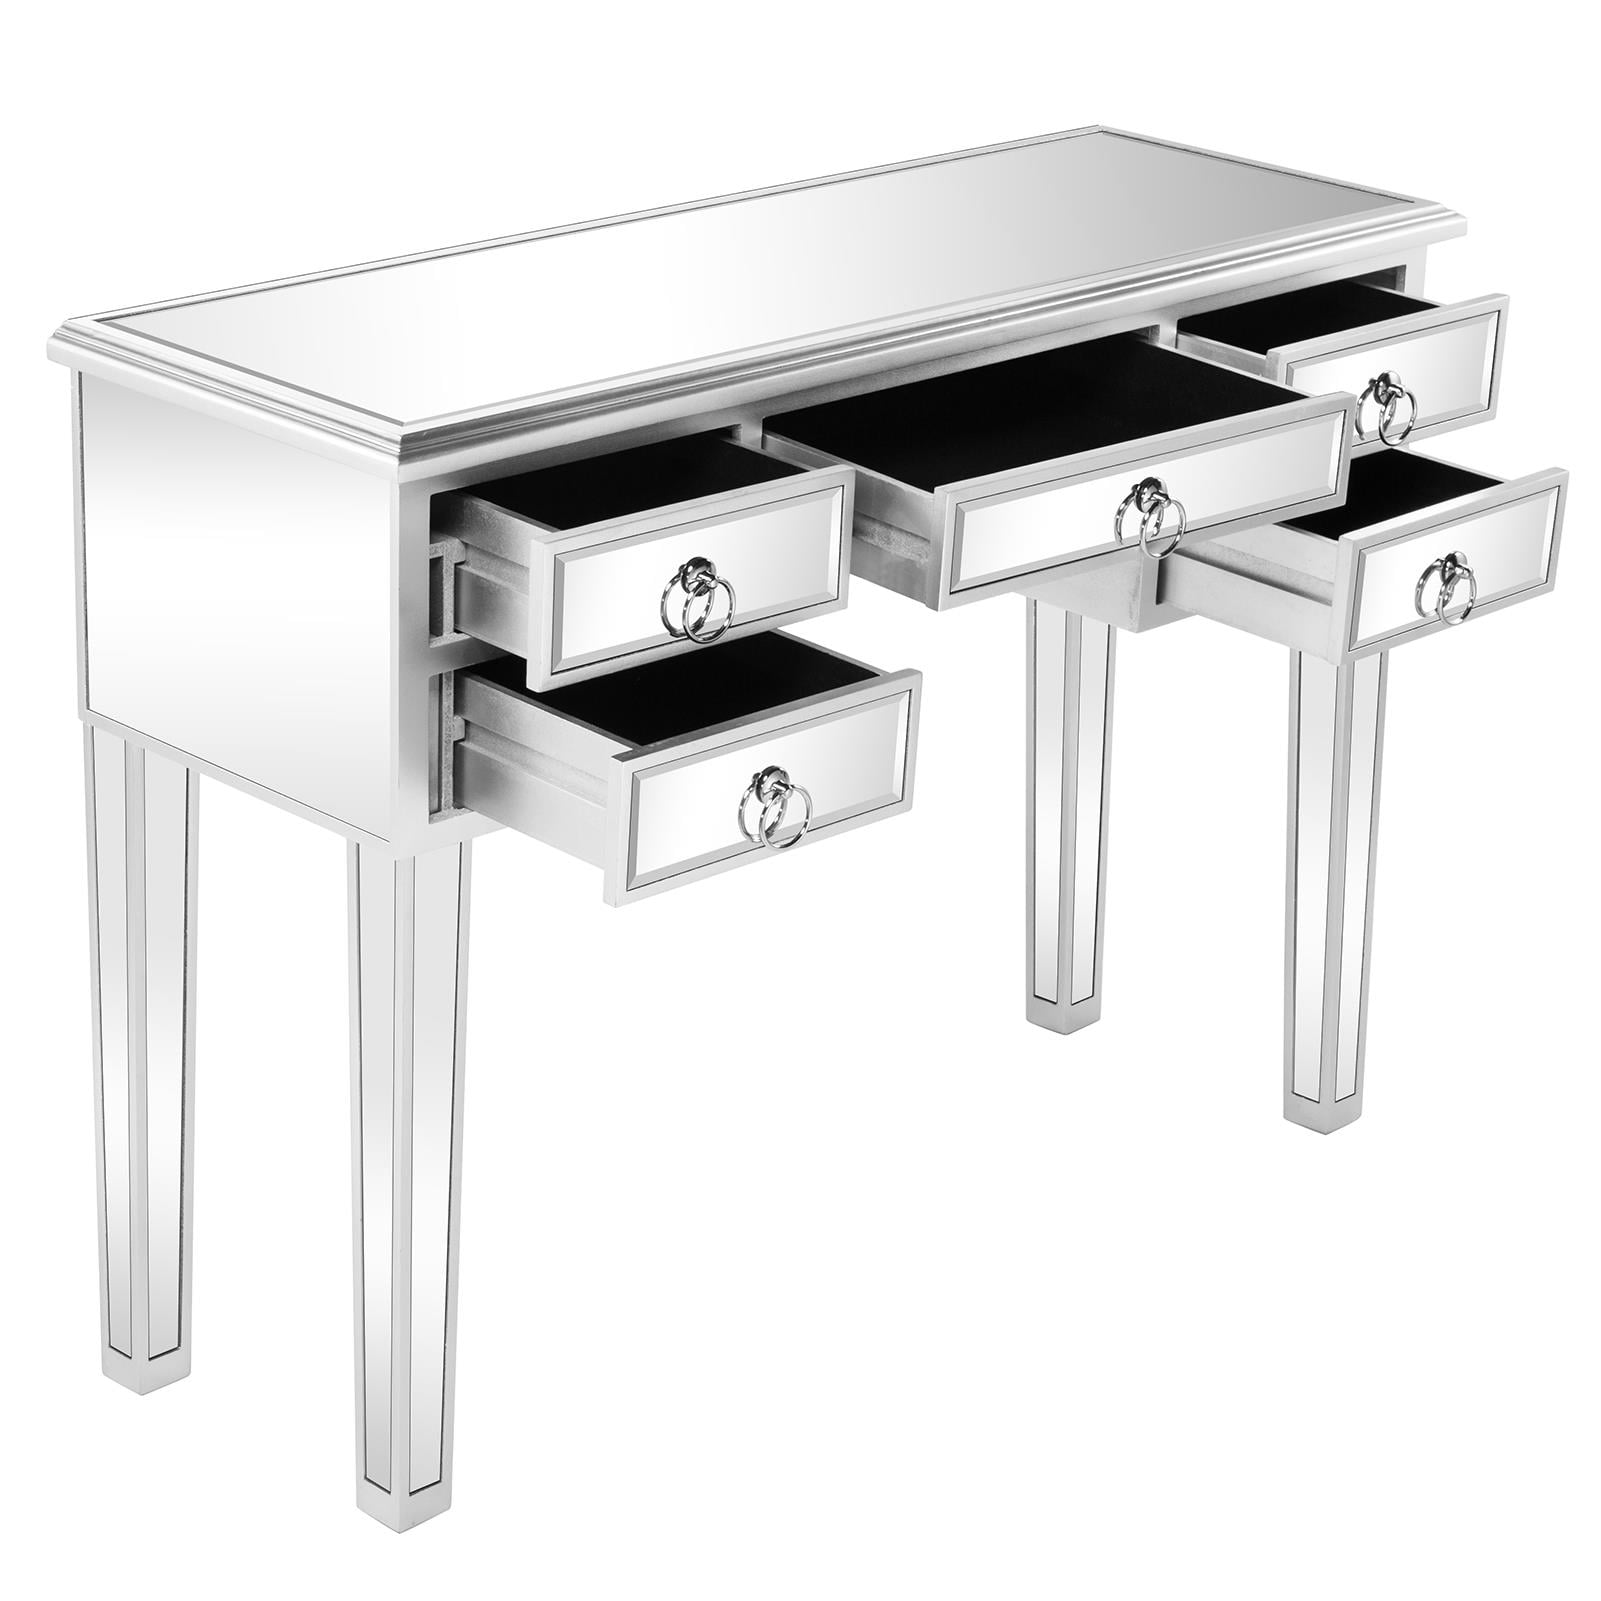 Ubesgoo Mirrored Makeup Desk Vanity, Console Table Vanity